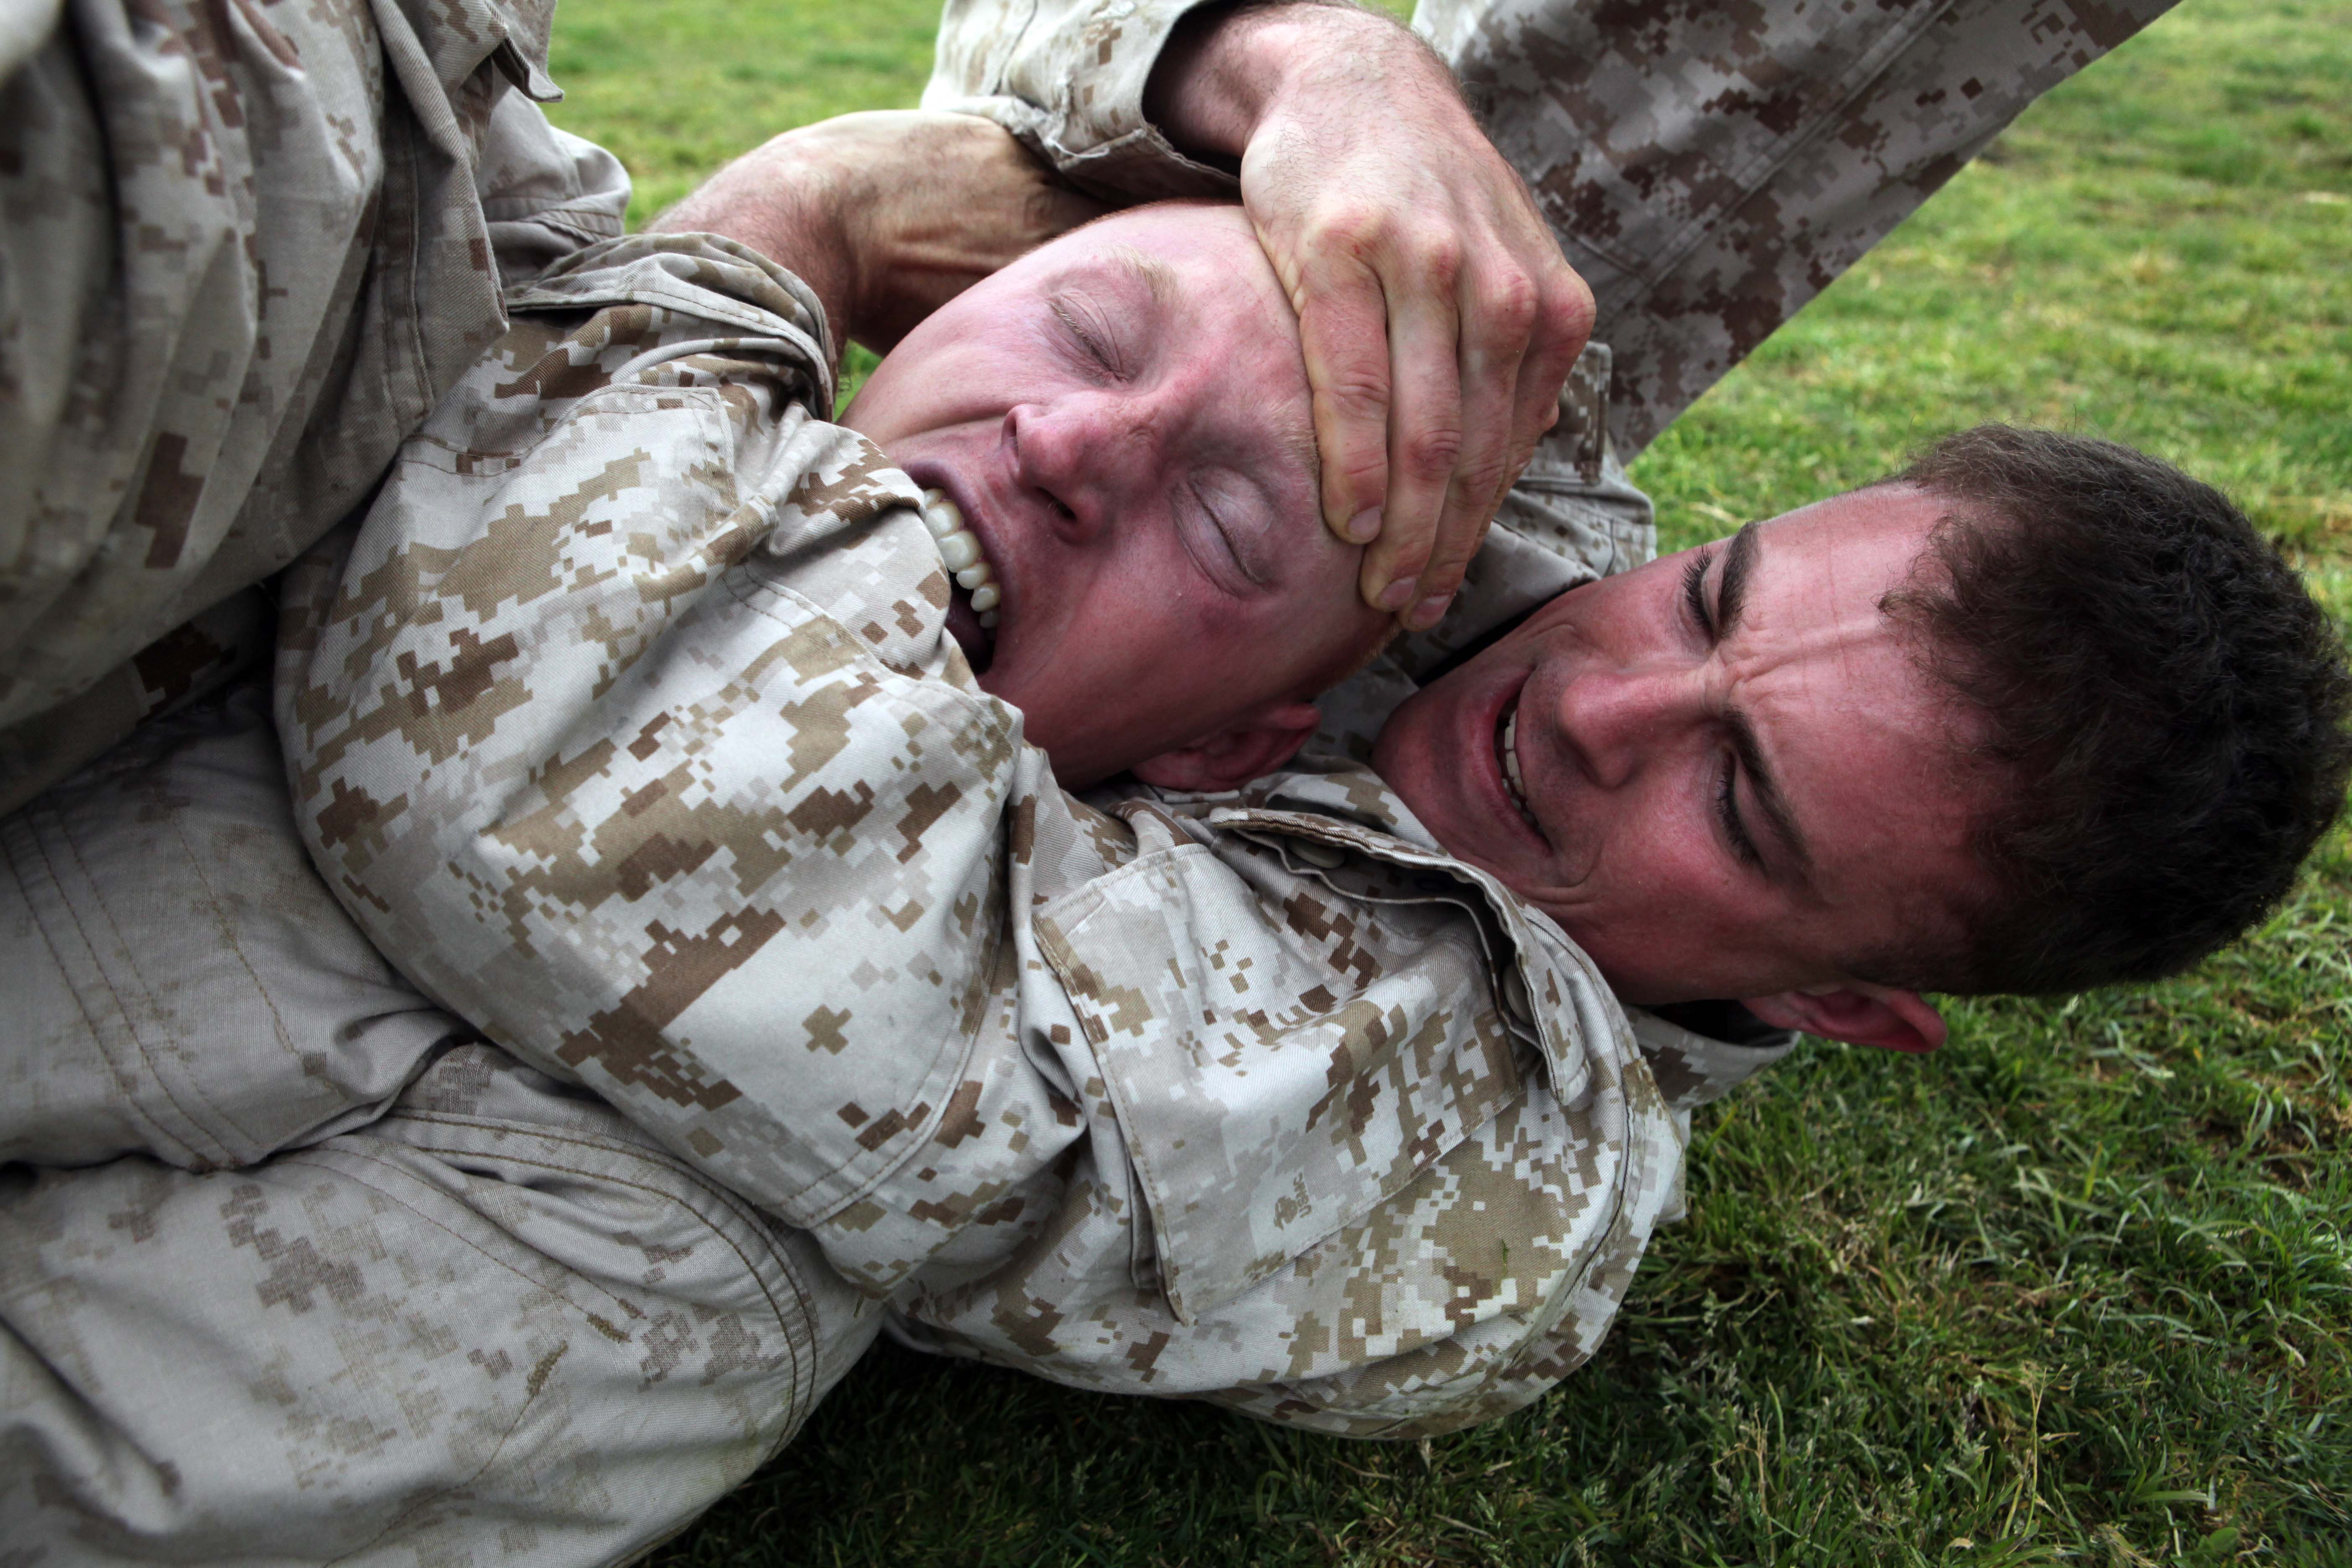 File:USMC grappling rear naked choke.jpg - Wikimedia Commons